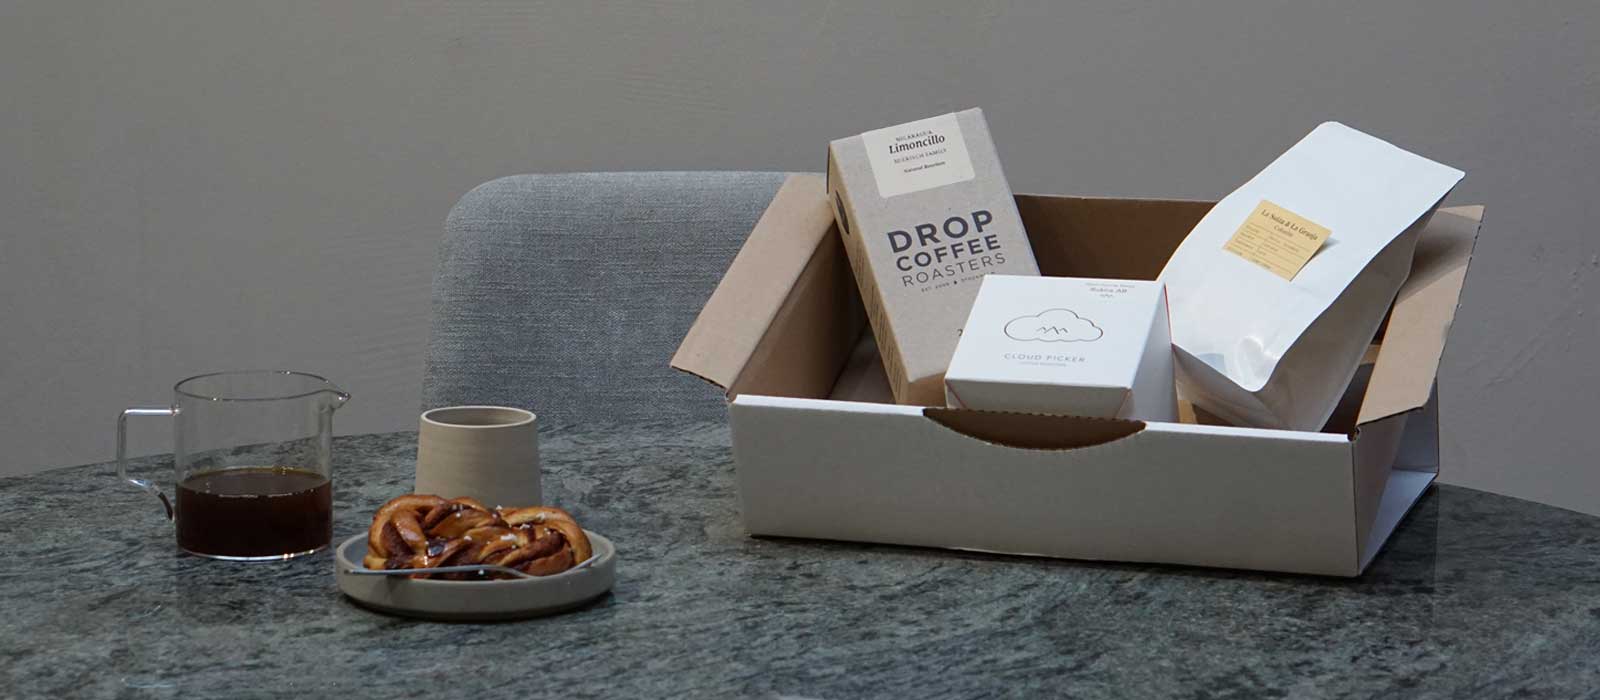 The Coffeevine January 2021 box